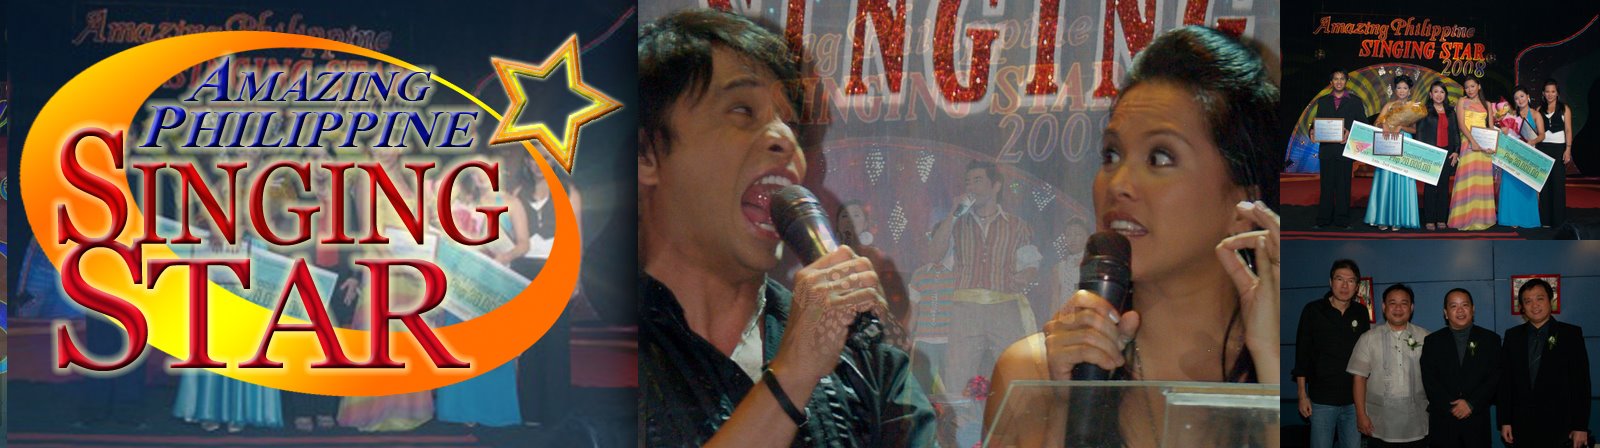 Amazing Philippine Singing Star